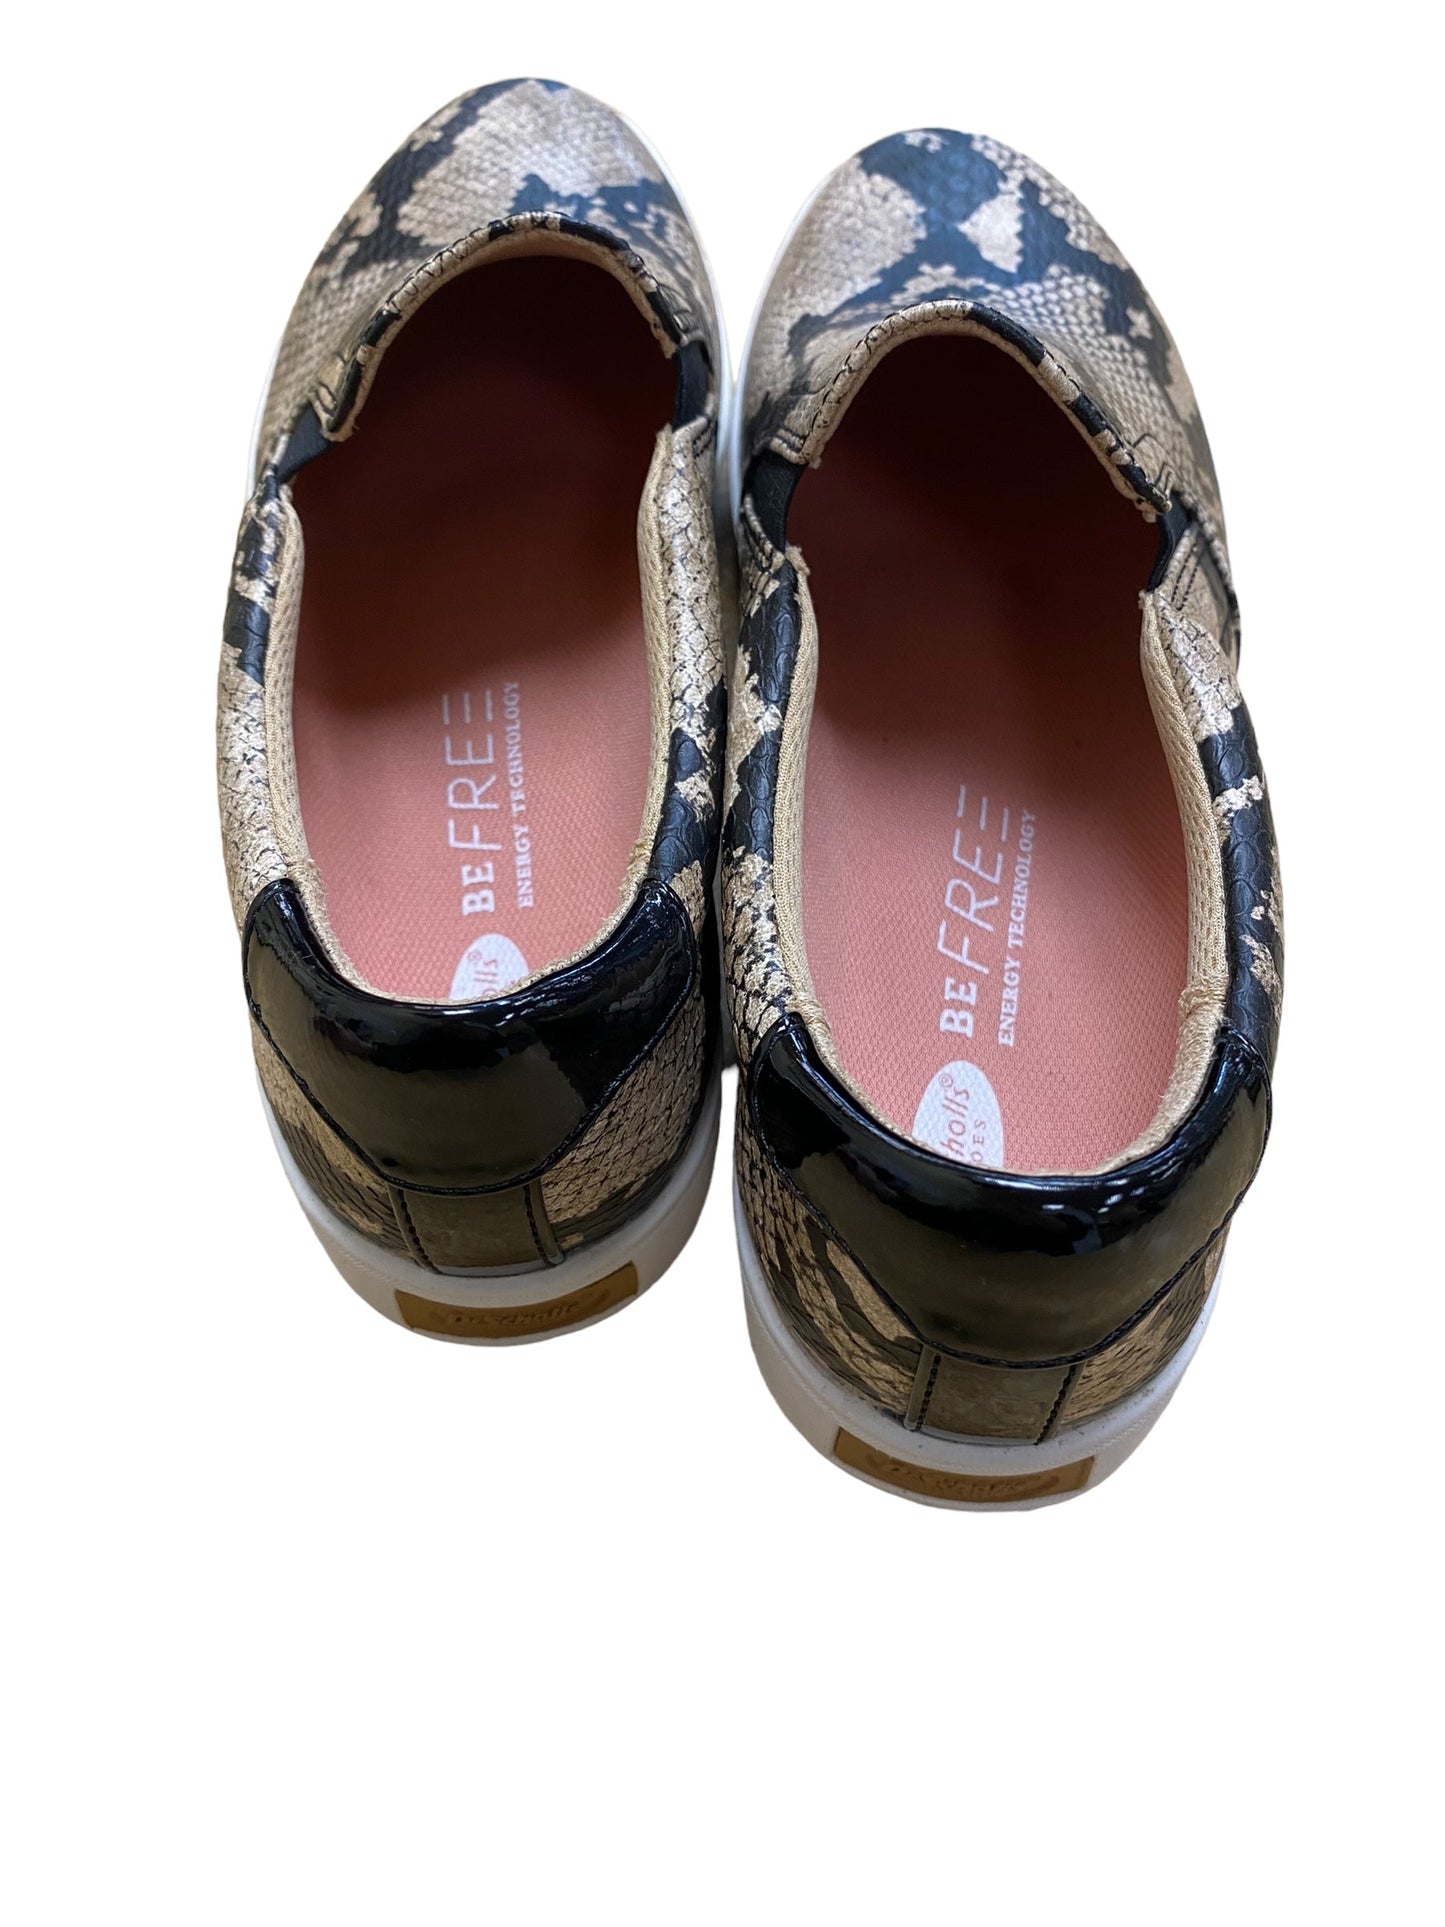 Shoes Flats By Dr Scholls  Size: 6.5